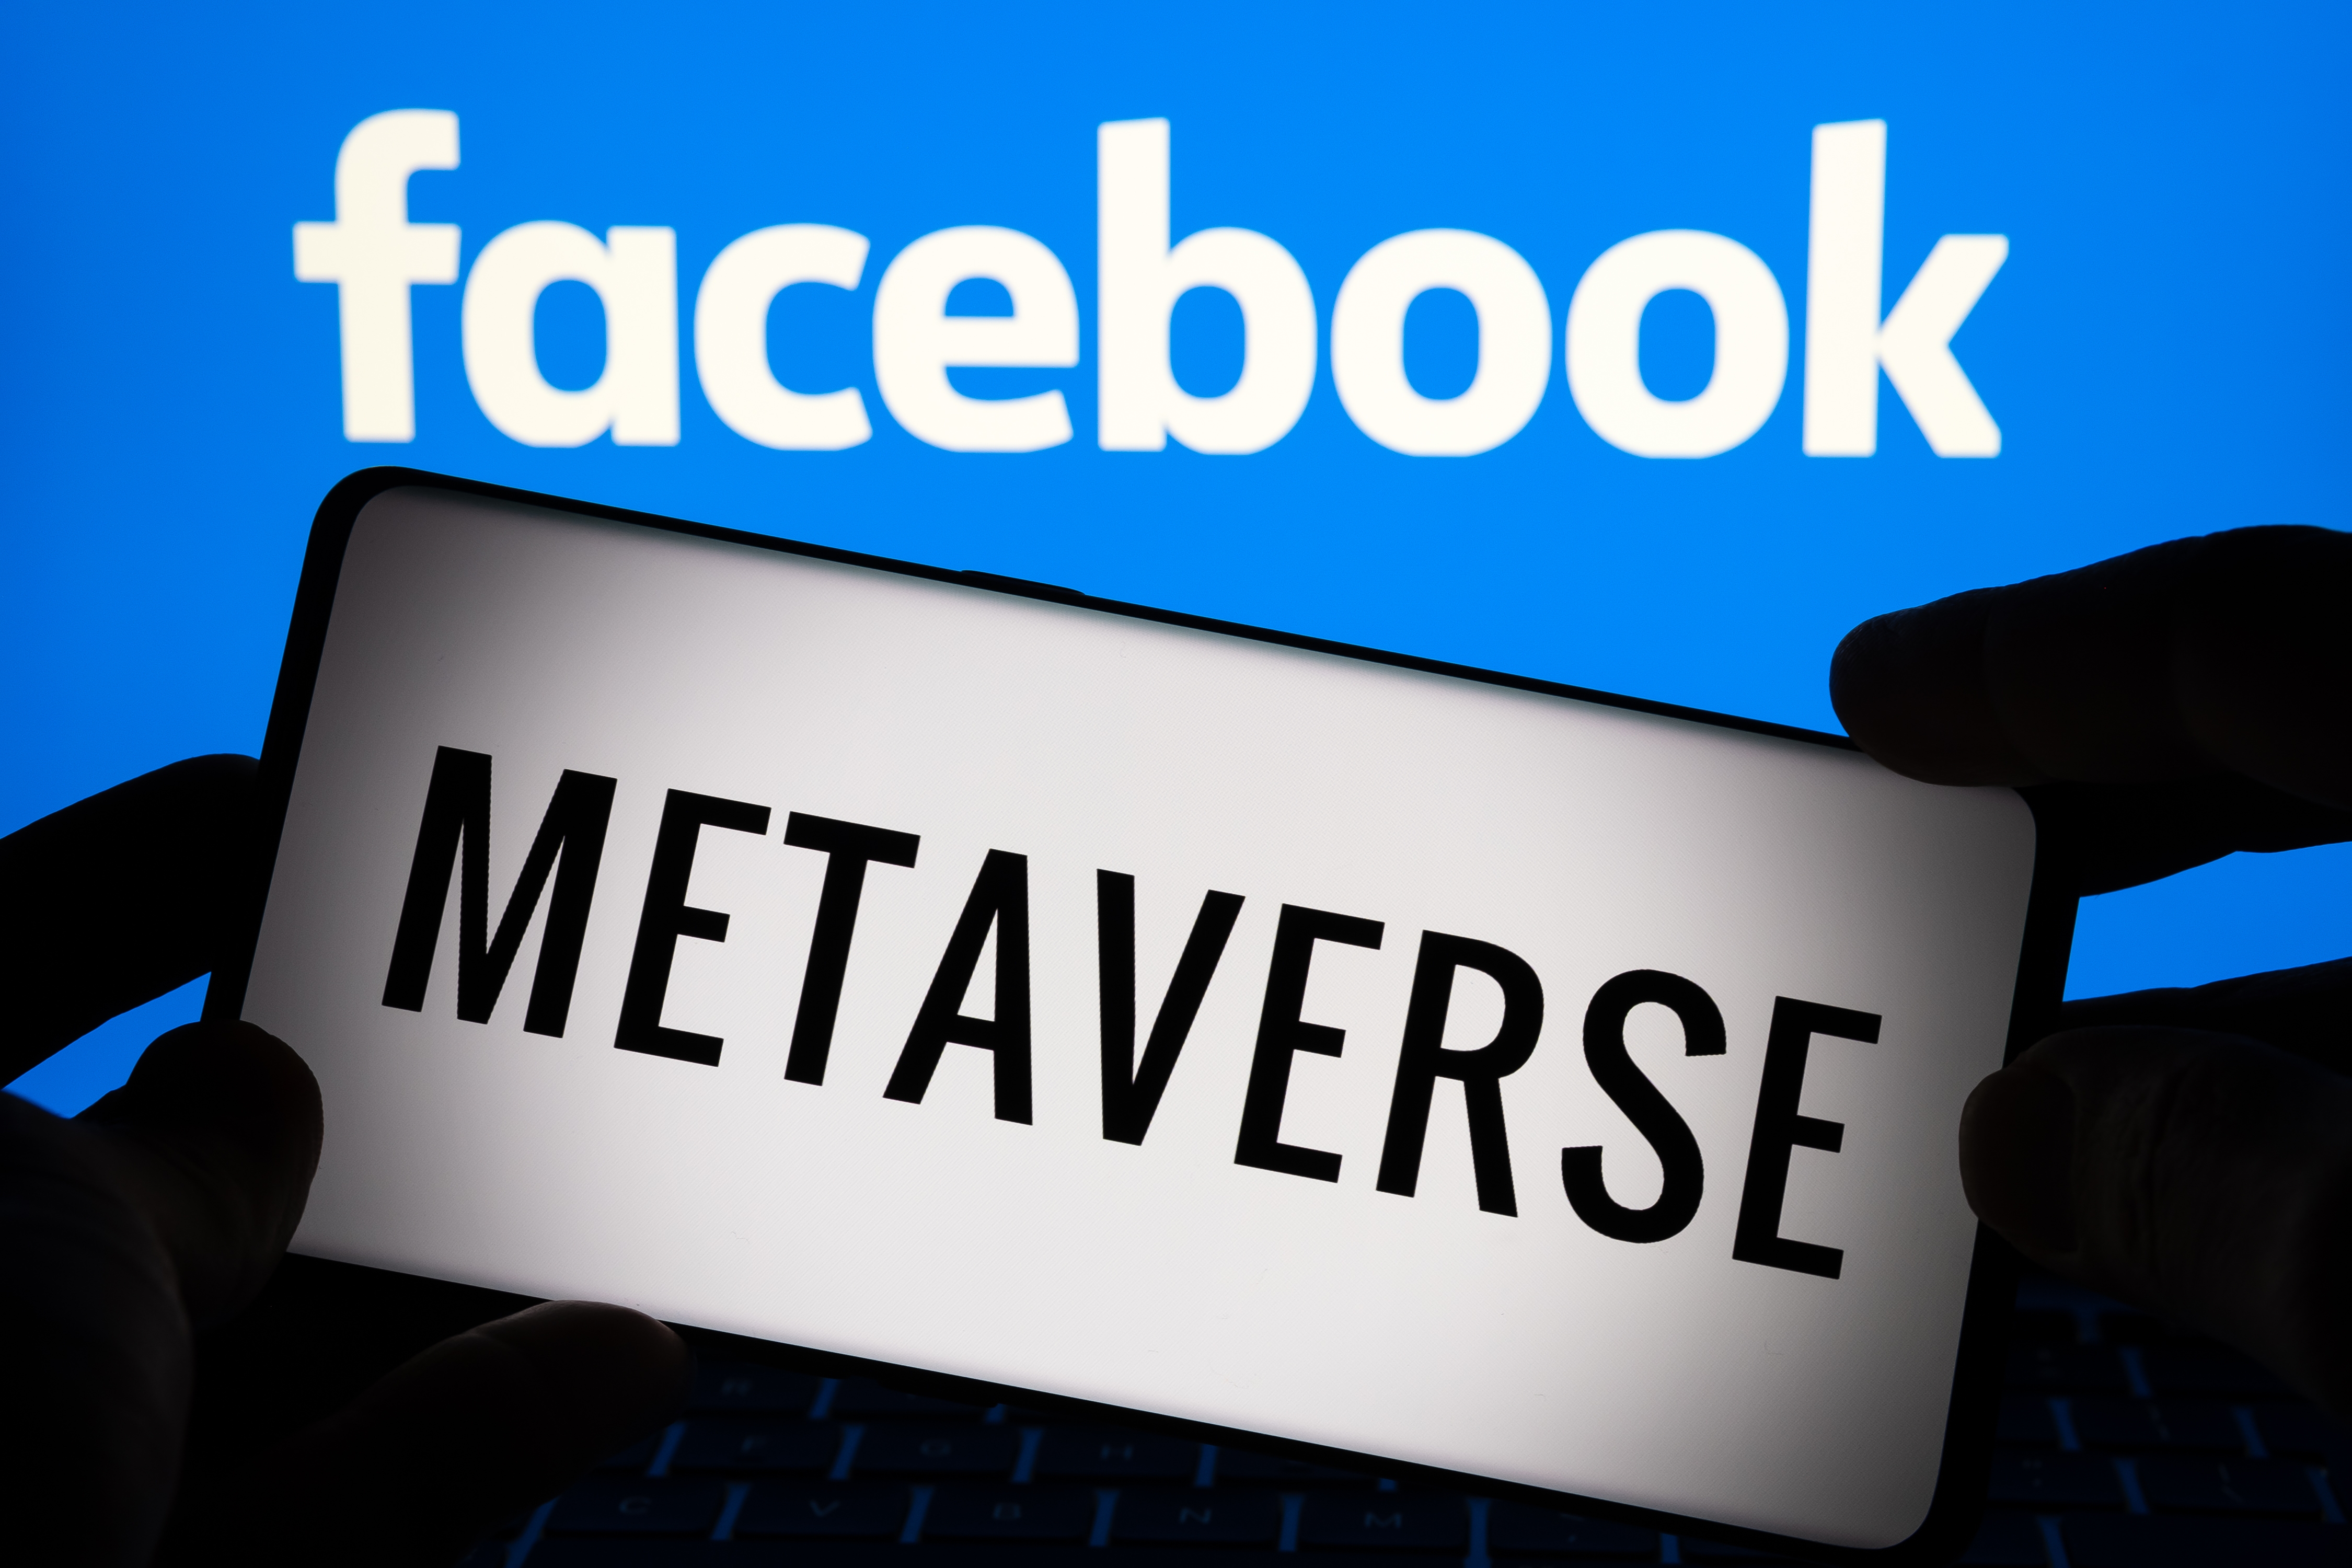 Why Facebook’s Metaverse Push Worries Me